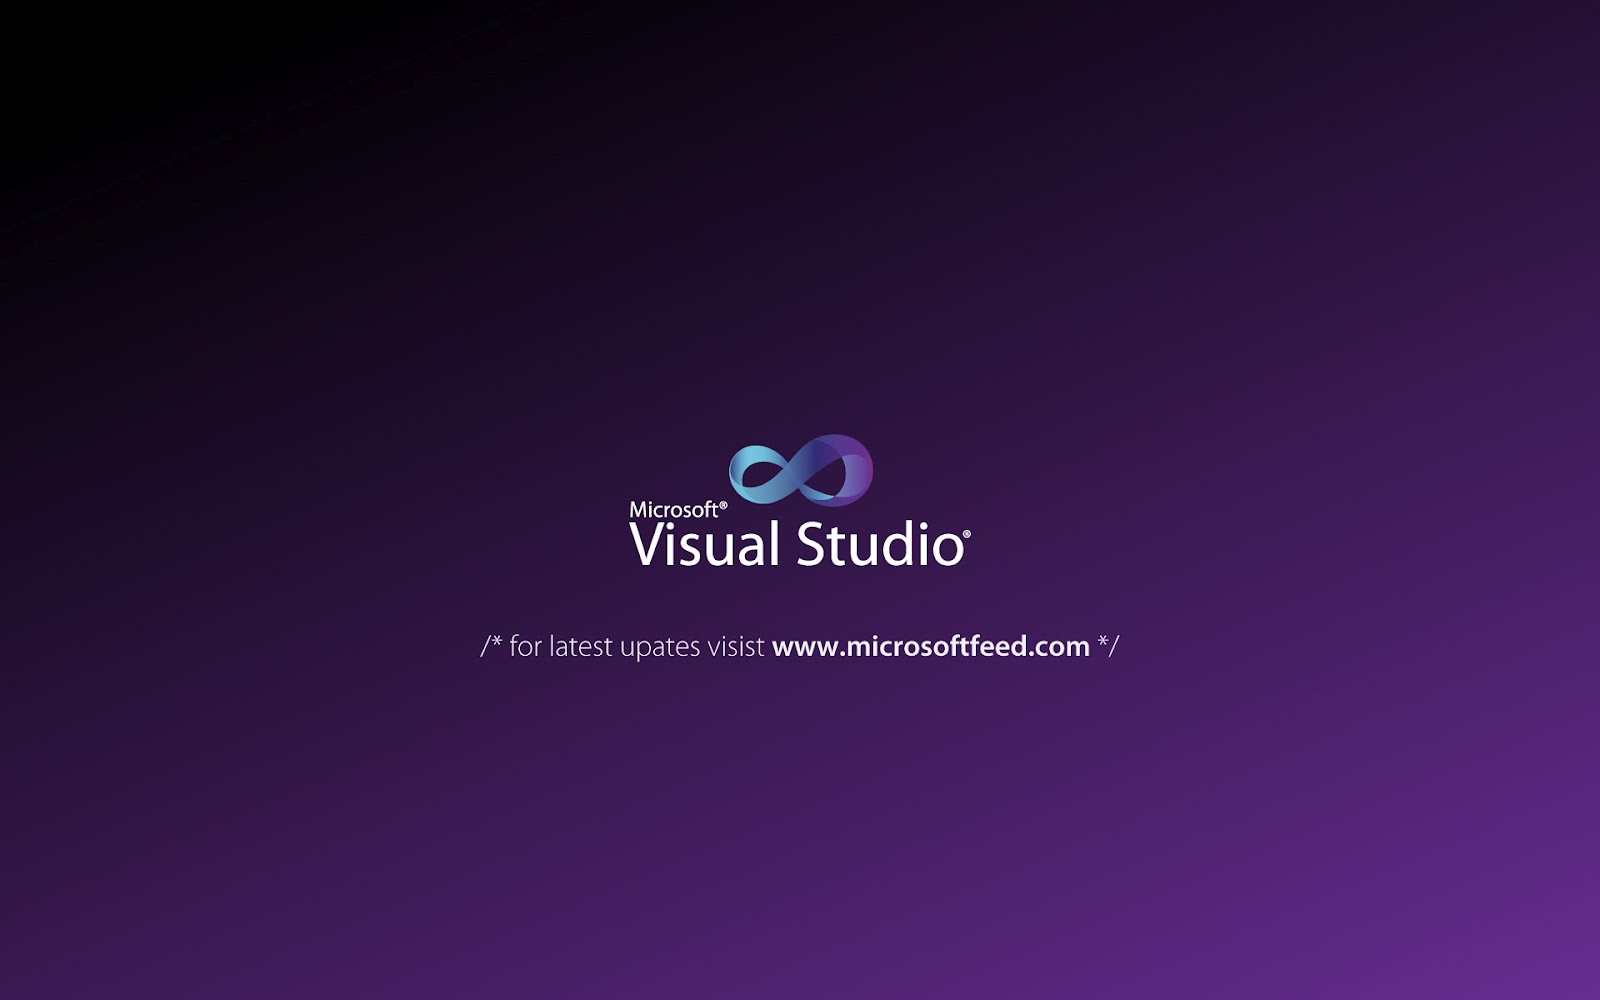 windows live messenger 10 HD Microsoft Visual Studio Wallpaper